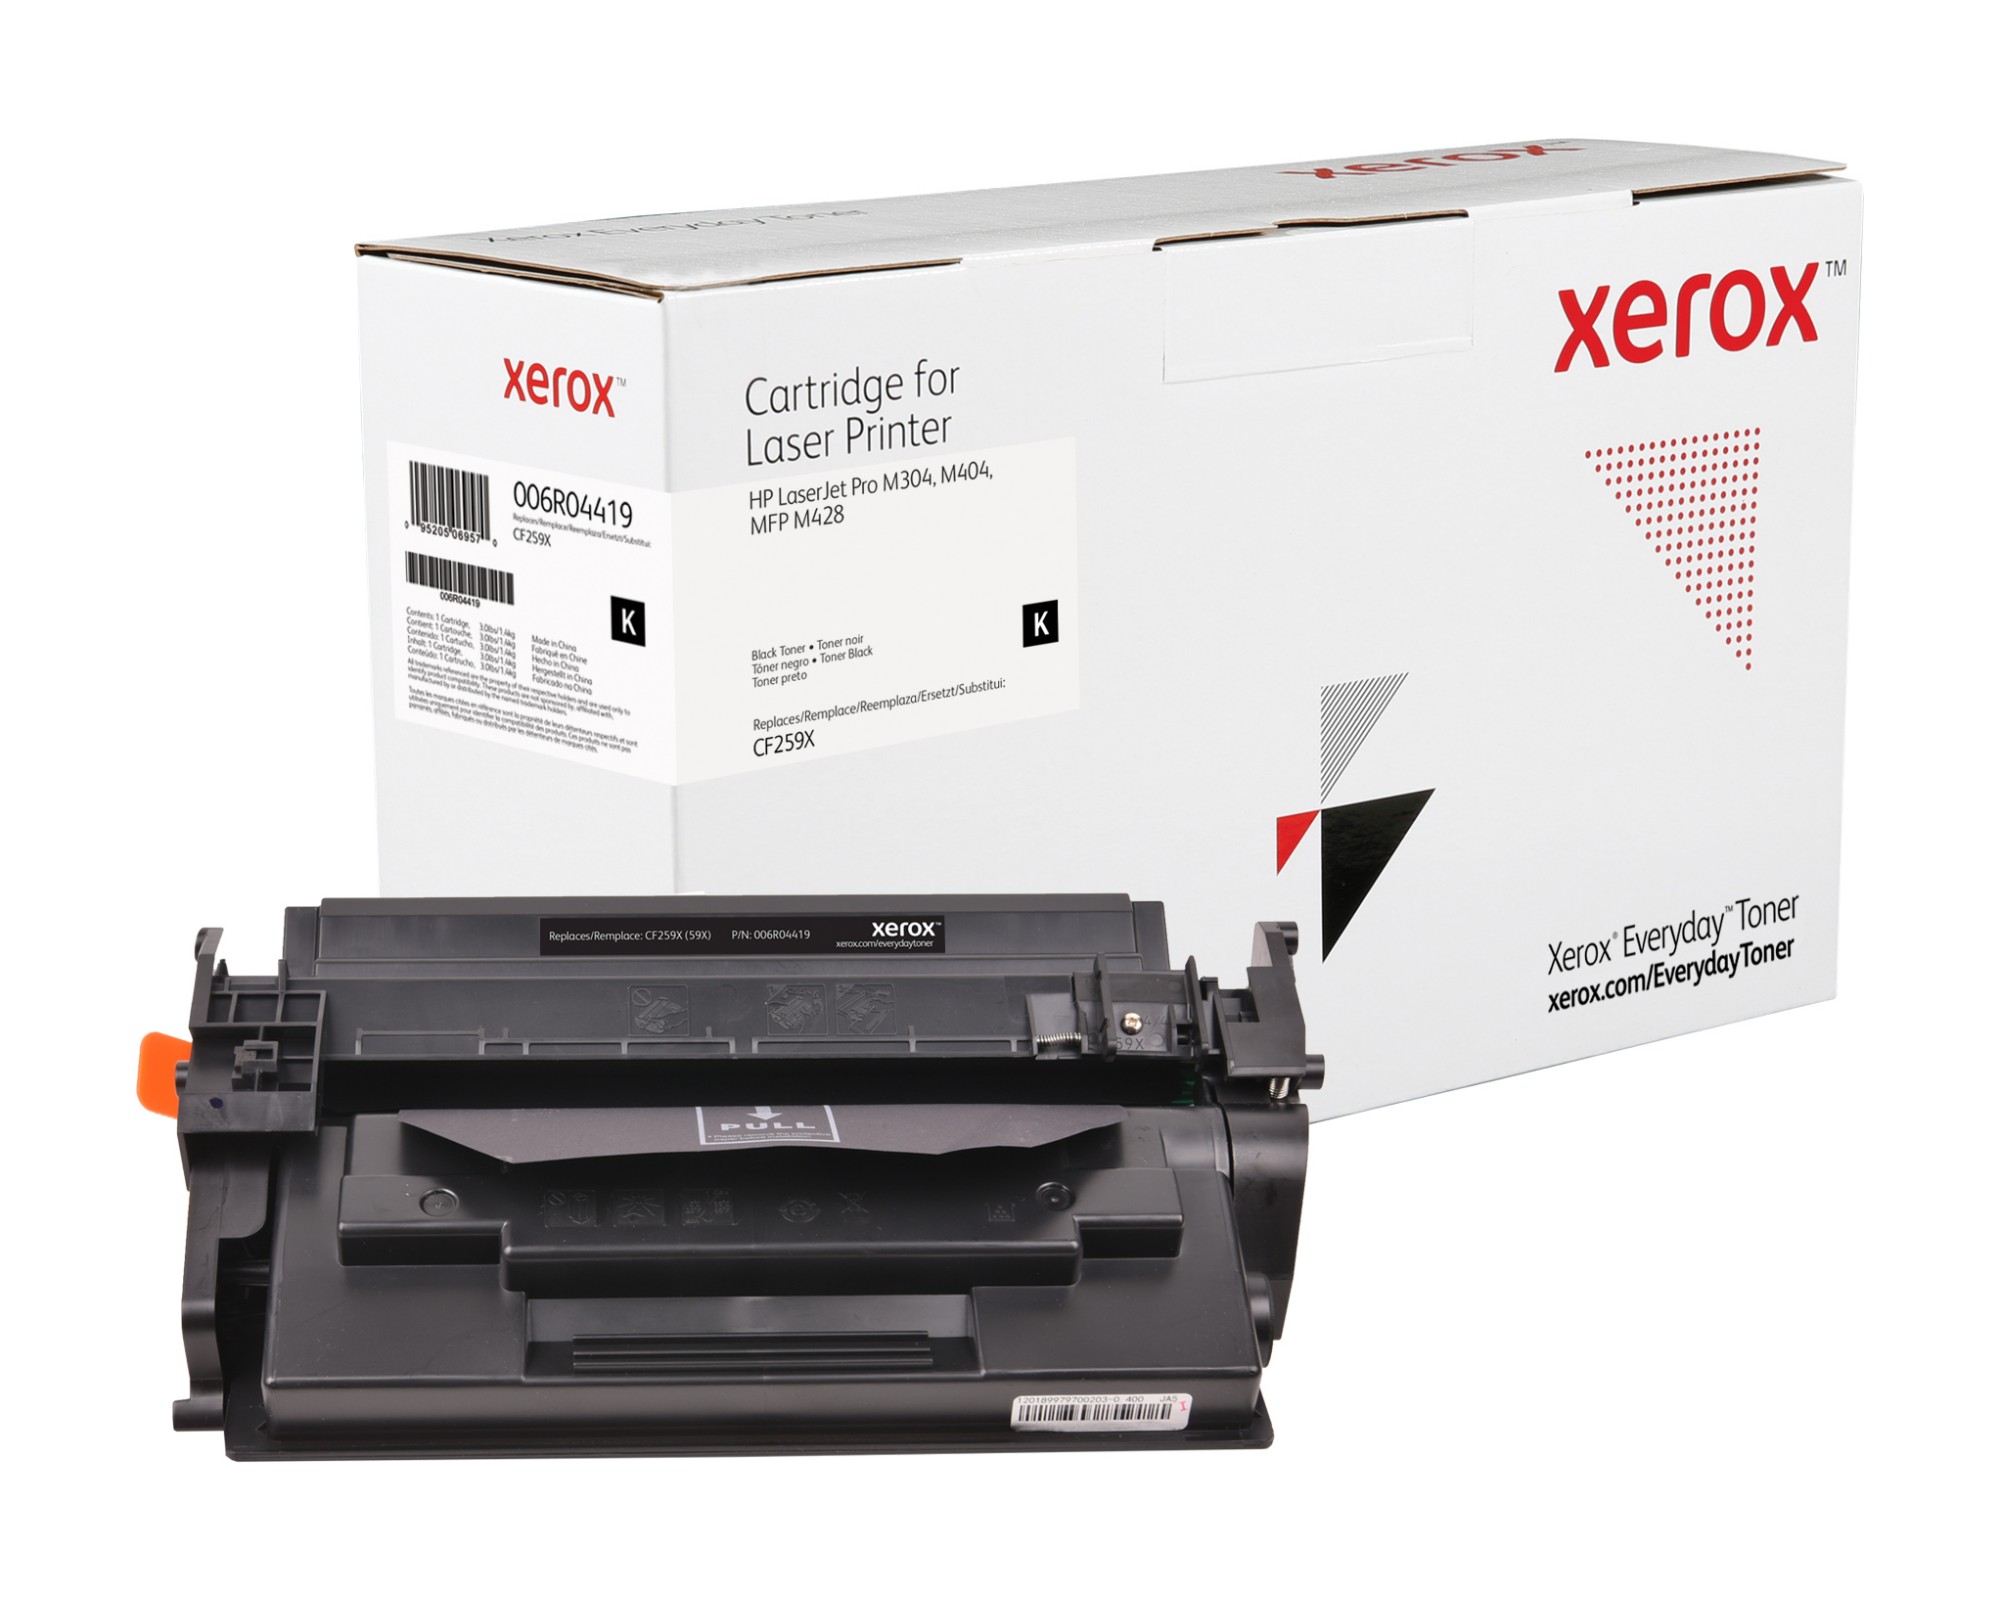 Xerox Everyday Toner for HP CF259X (59X) Black Toner Cartridge